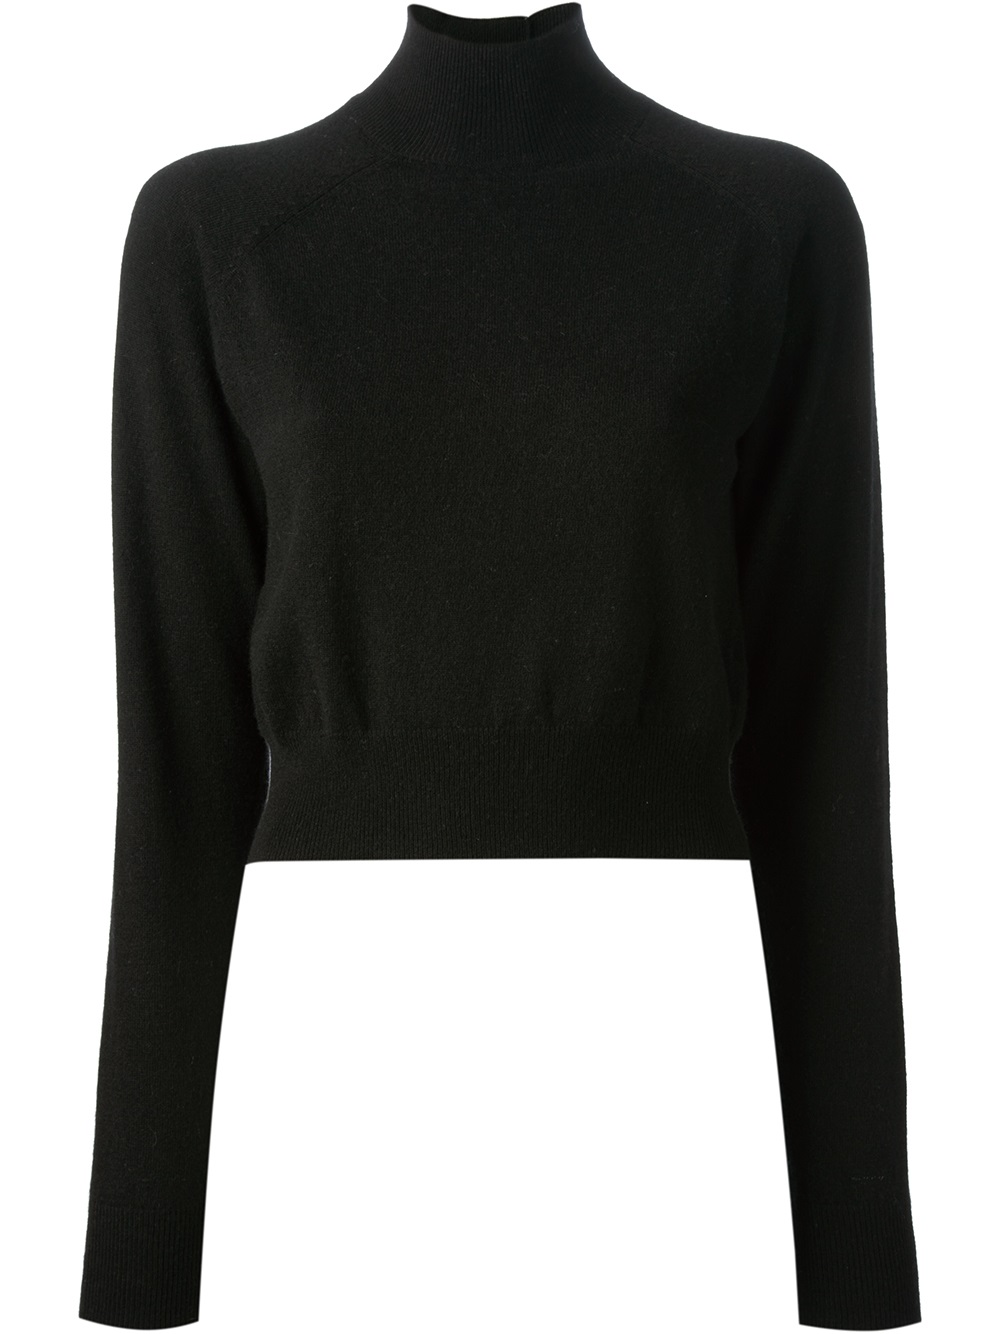 Alexander wang Roll Neck Sweater in Black | Lyst